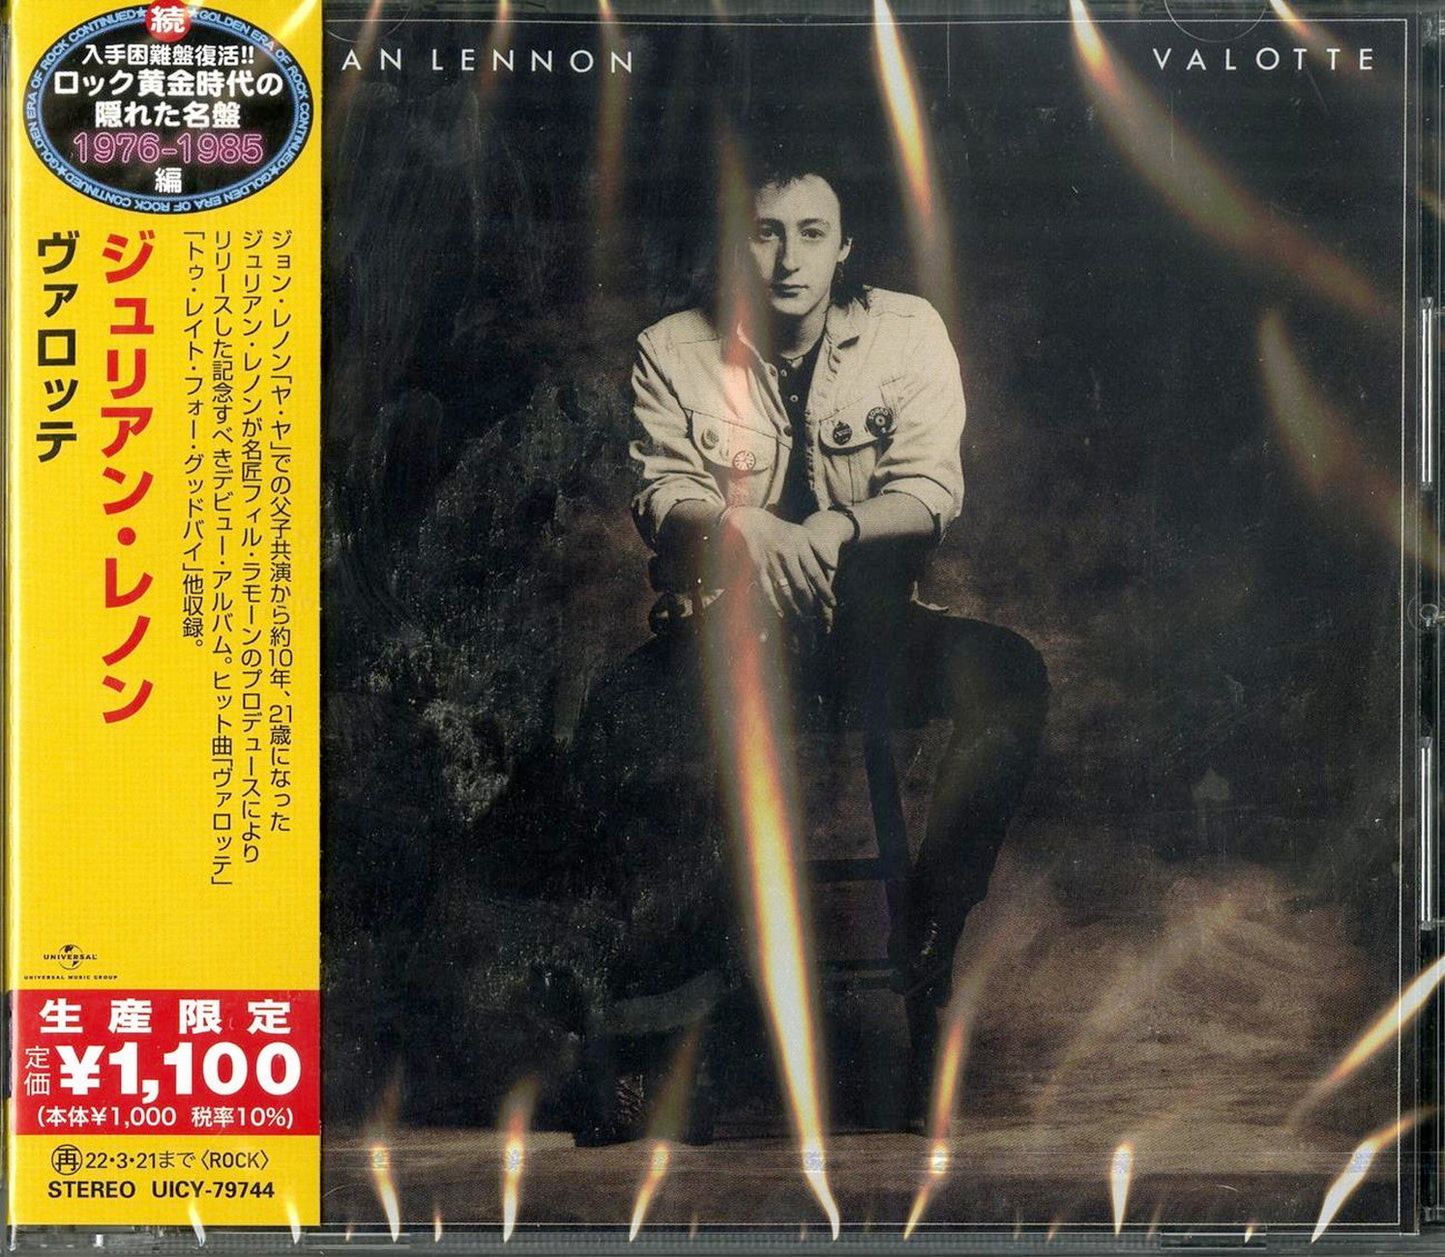 Julian Lennon - Valotte - Japan  CD Limited Edition